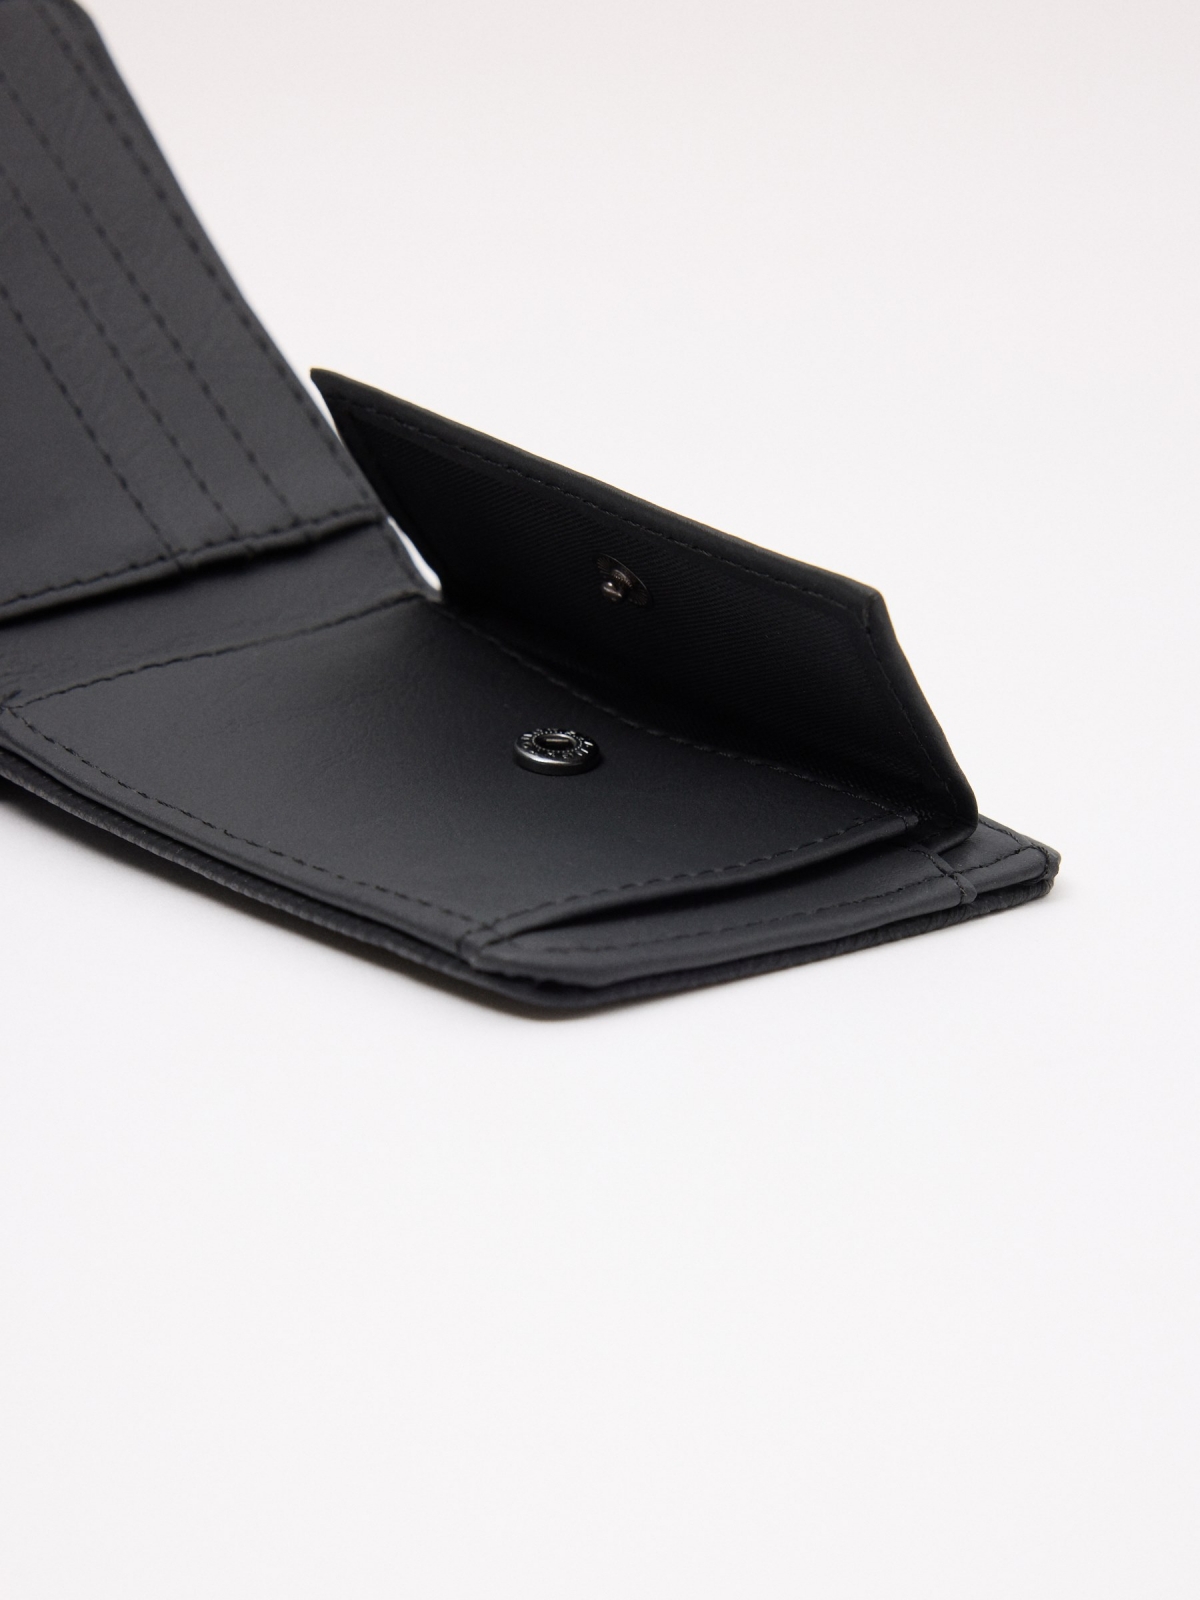 Ethnic design leatherette wallet black detail view